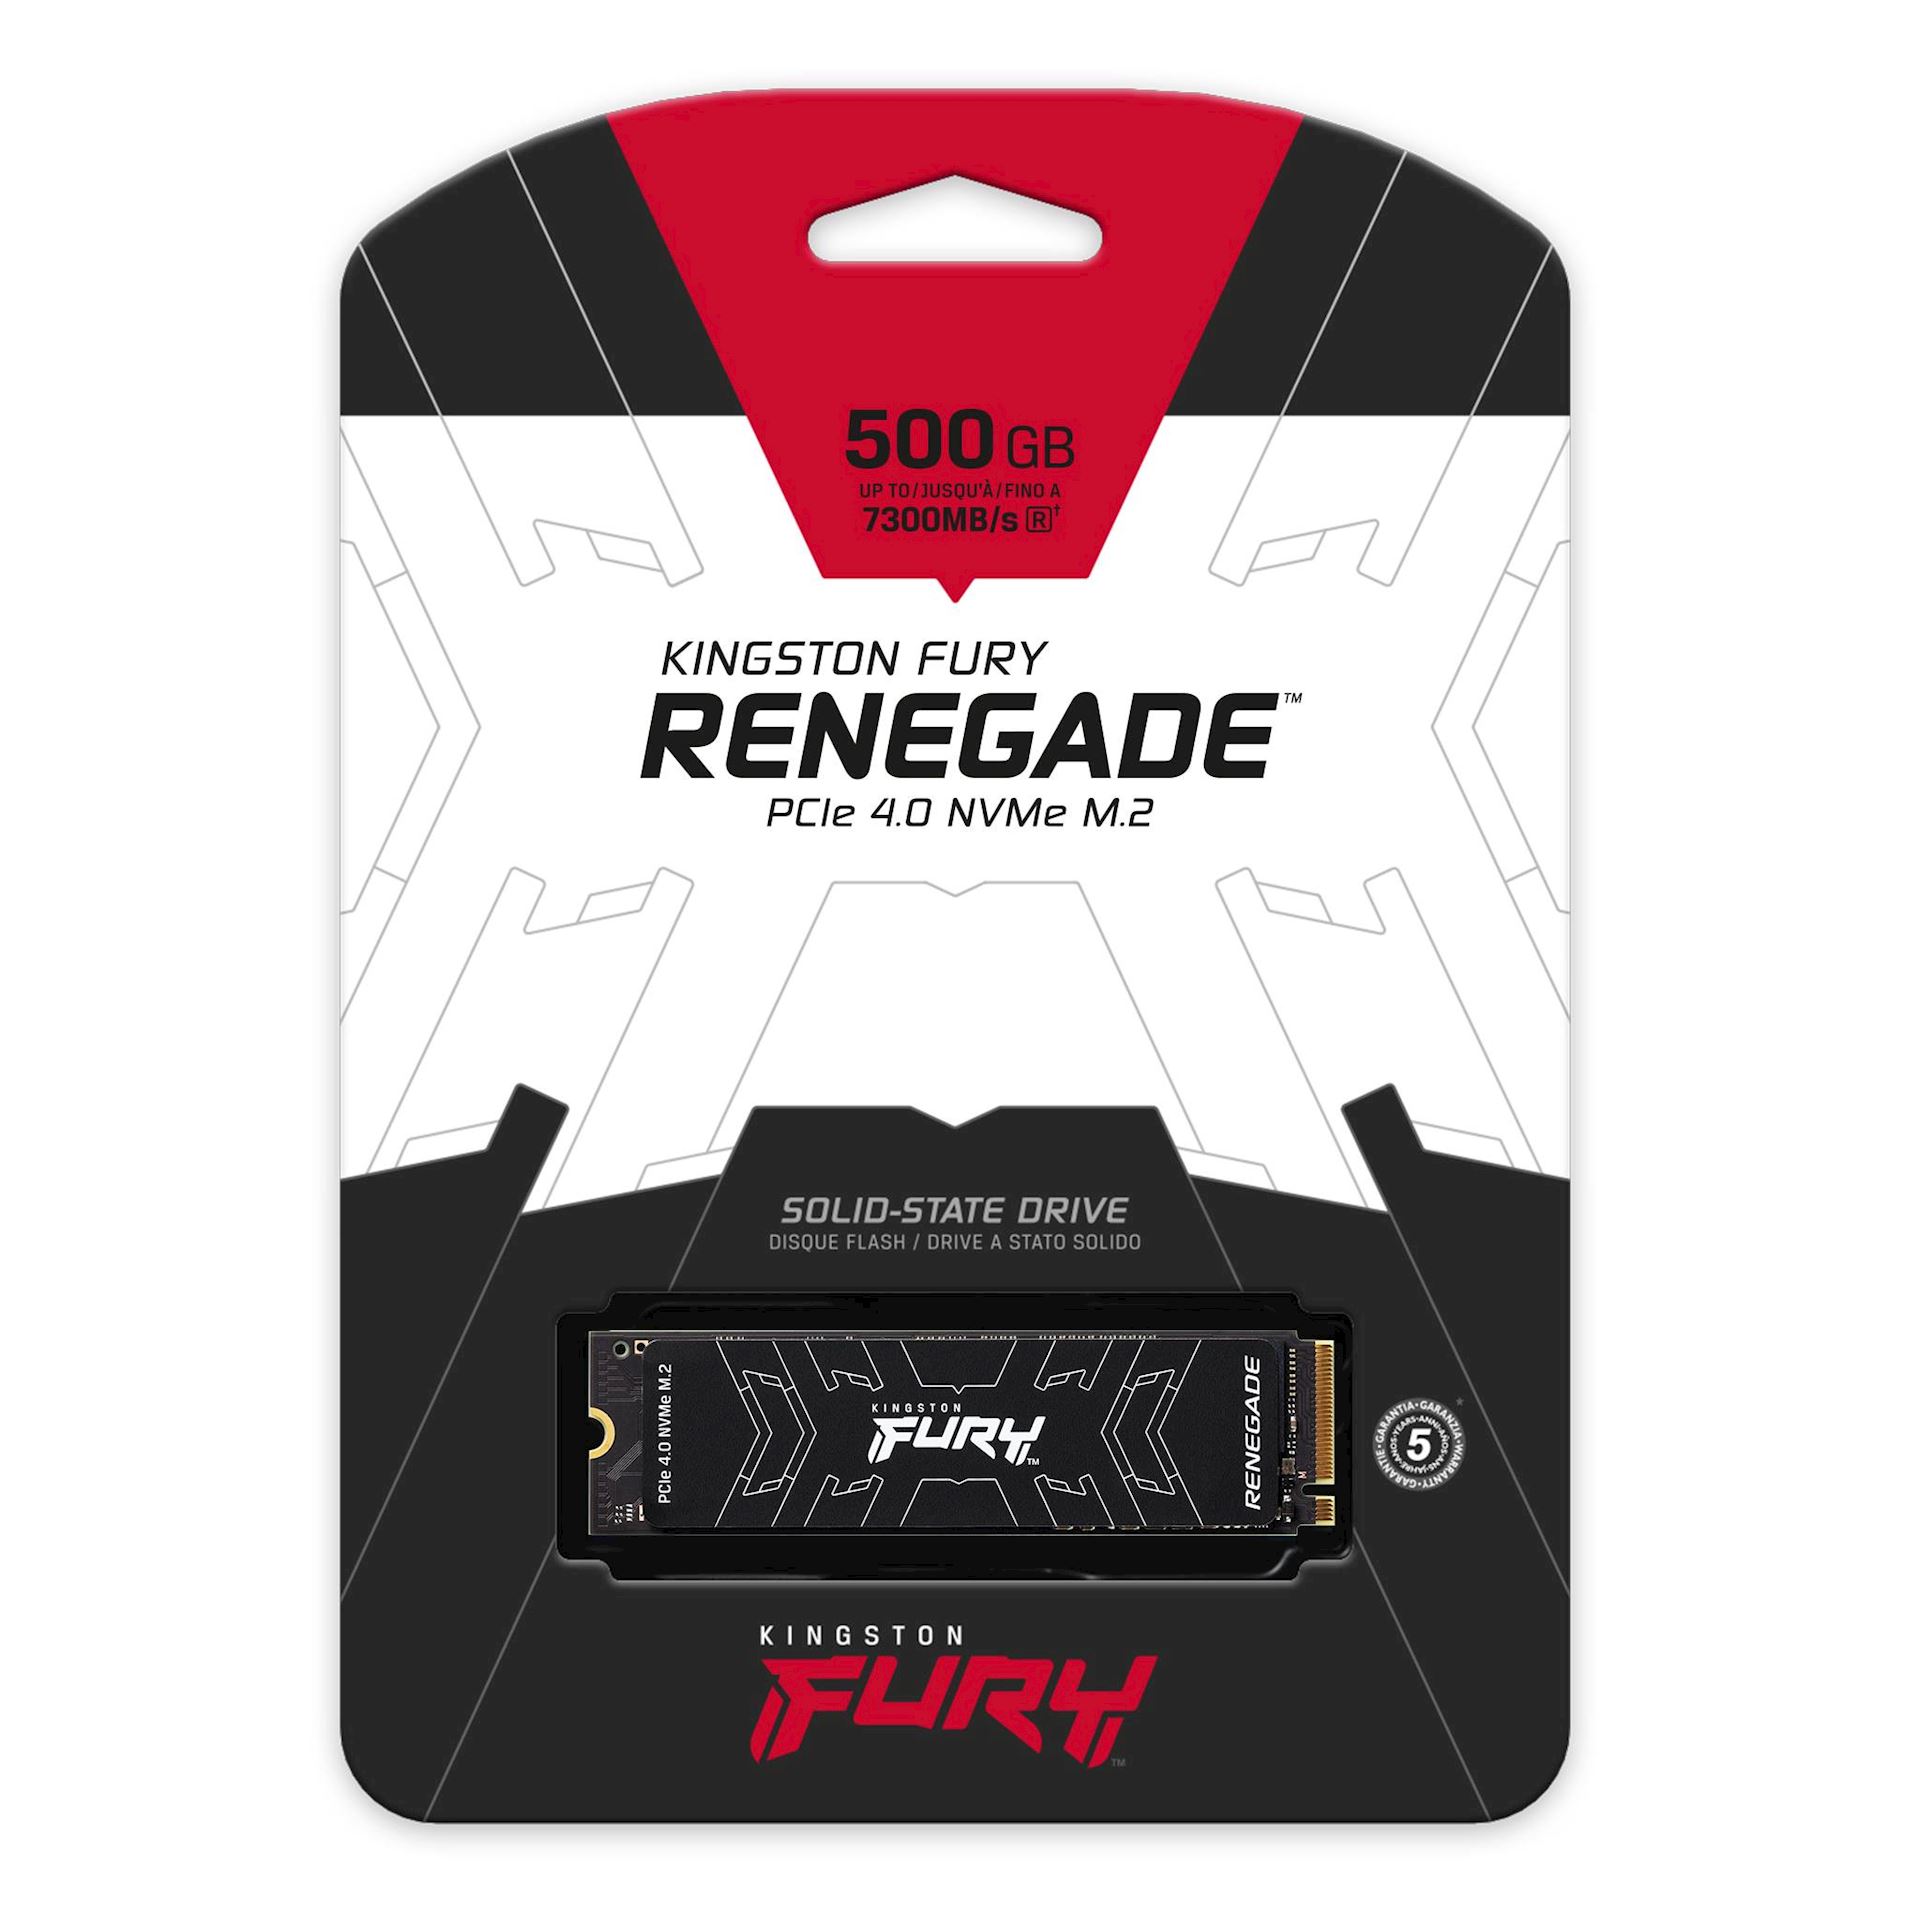 Kingston FURY Renegade SSD 500GB M.2 |